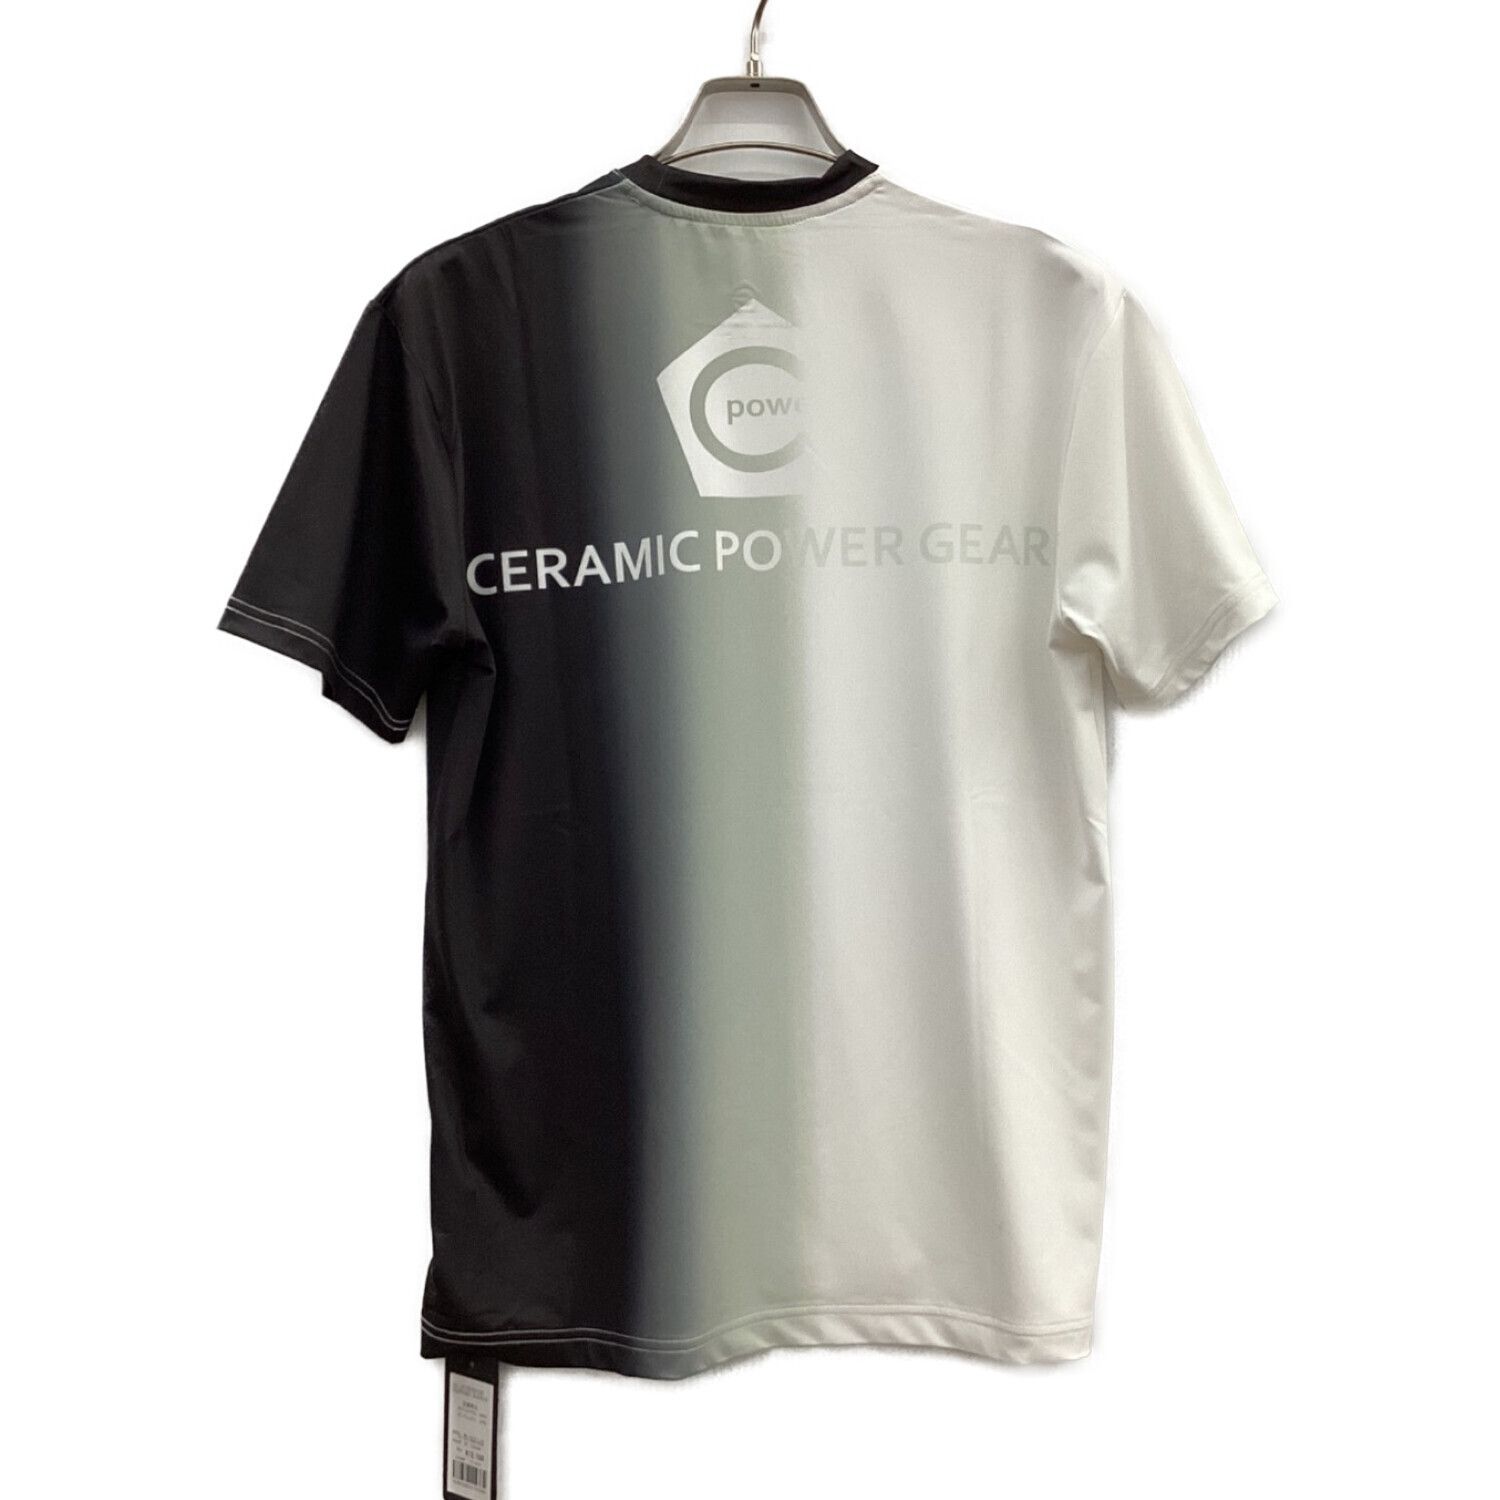 CERAMIC POWER GEAR (セラミックパワーギア) 野球用練習ウェア メンズ